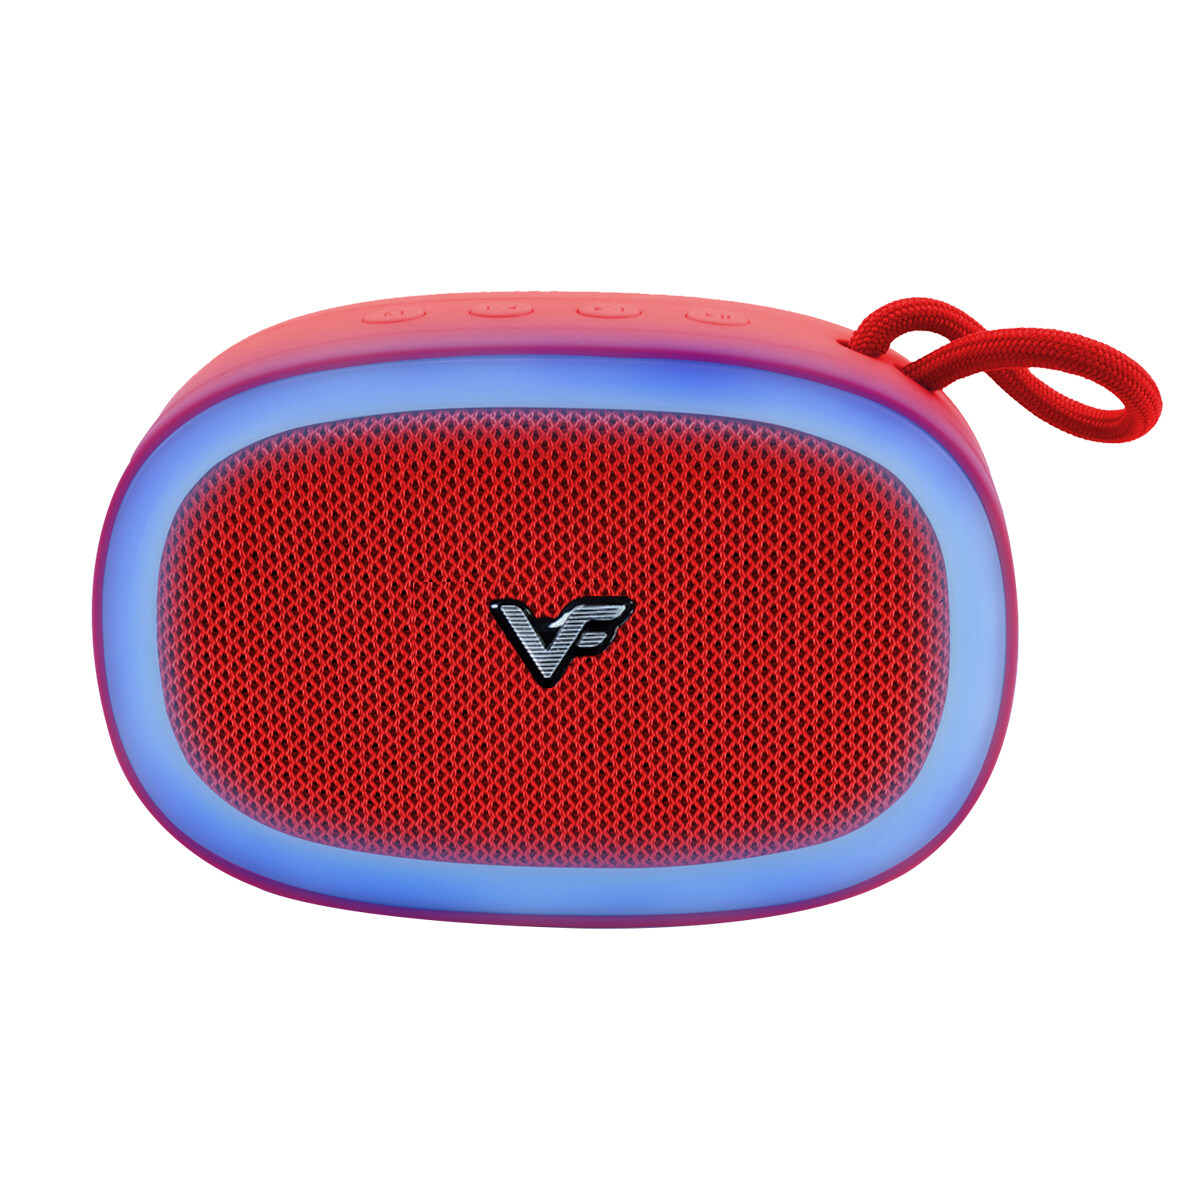 Vinnfier VF Tango Neo 1 Lightweight Portable Bluetooth Speaker with FM Radio USB Drive Micro SD Card Slot